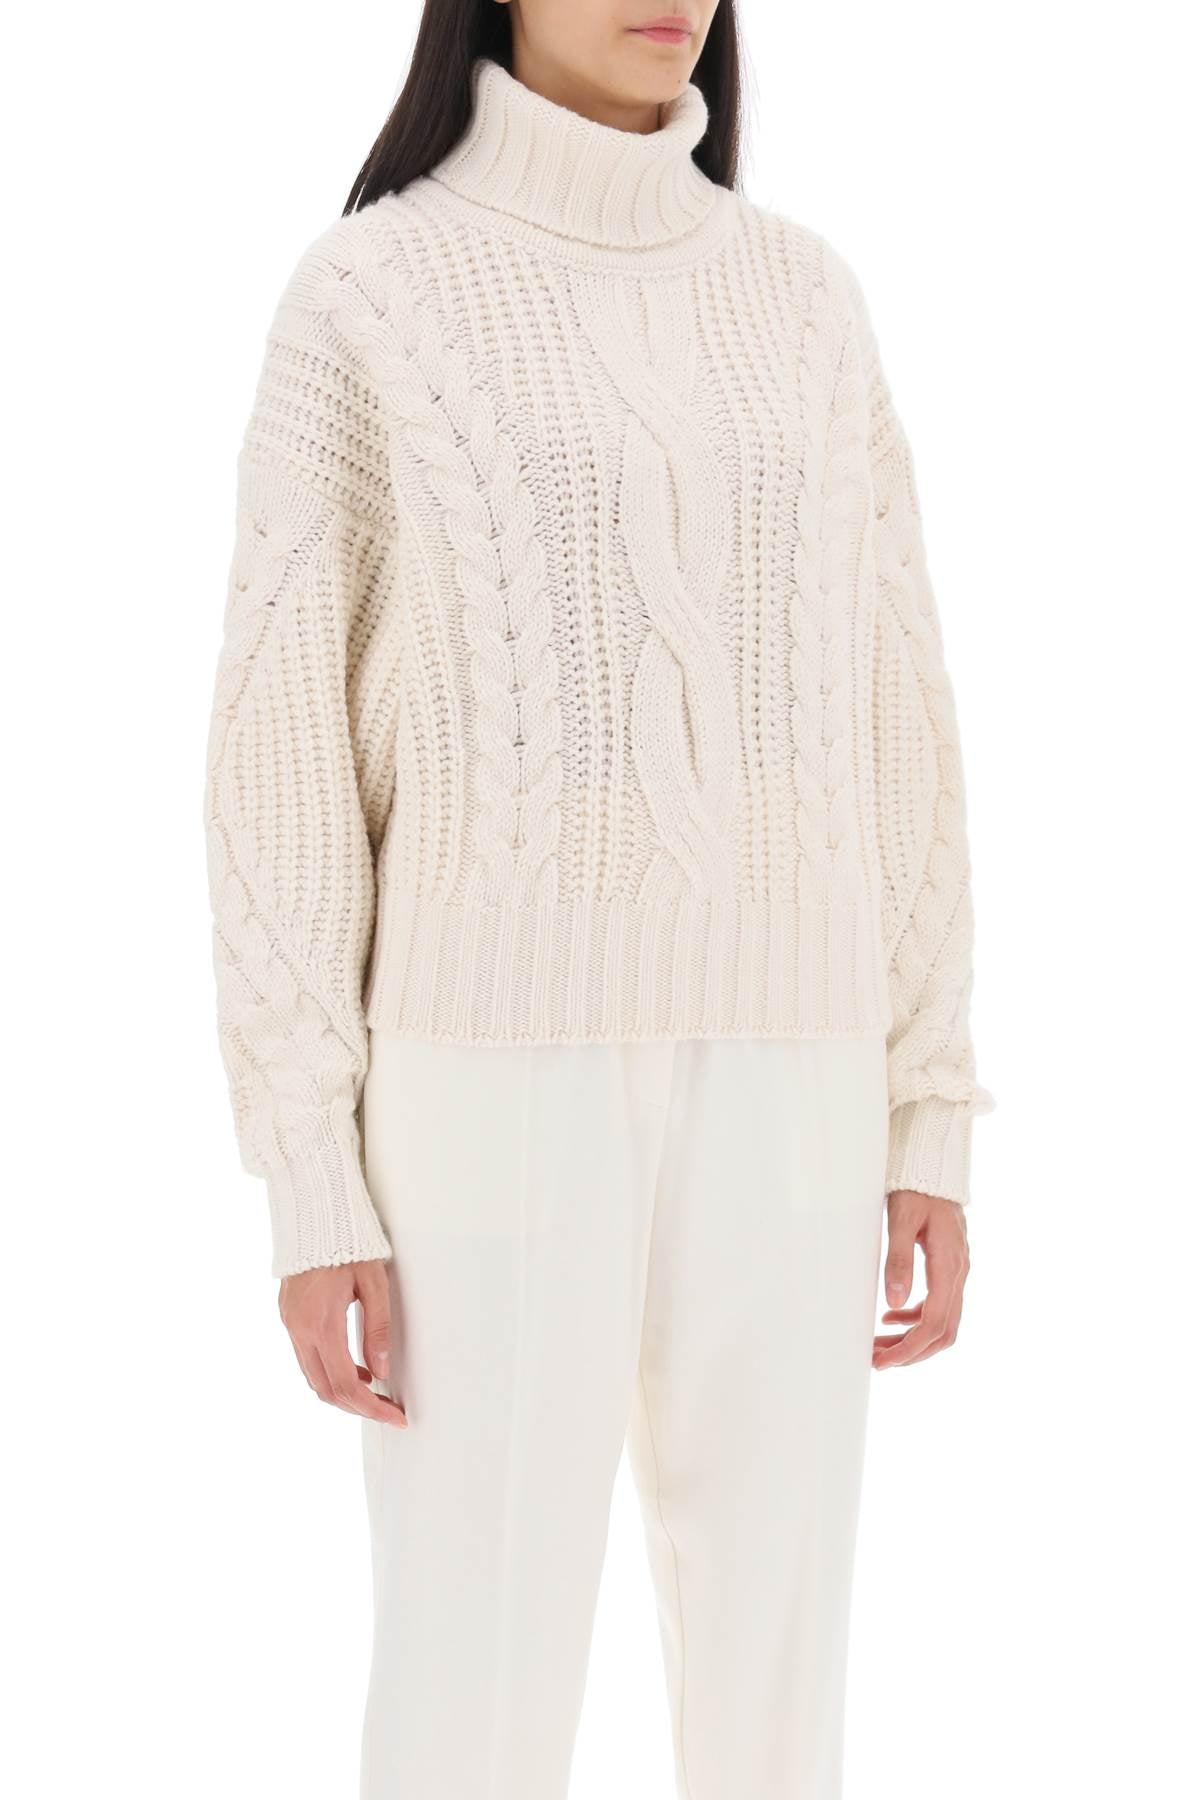 Mvp wardrobe visconti cable knit sweater-1